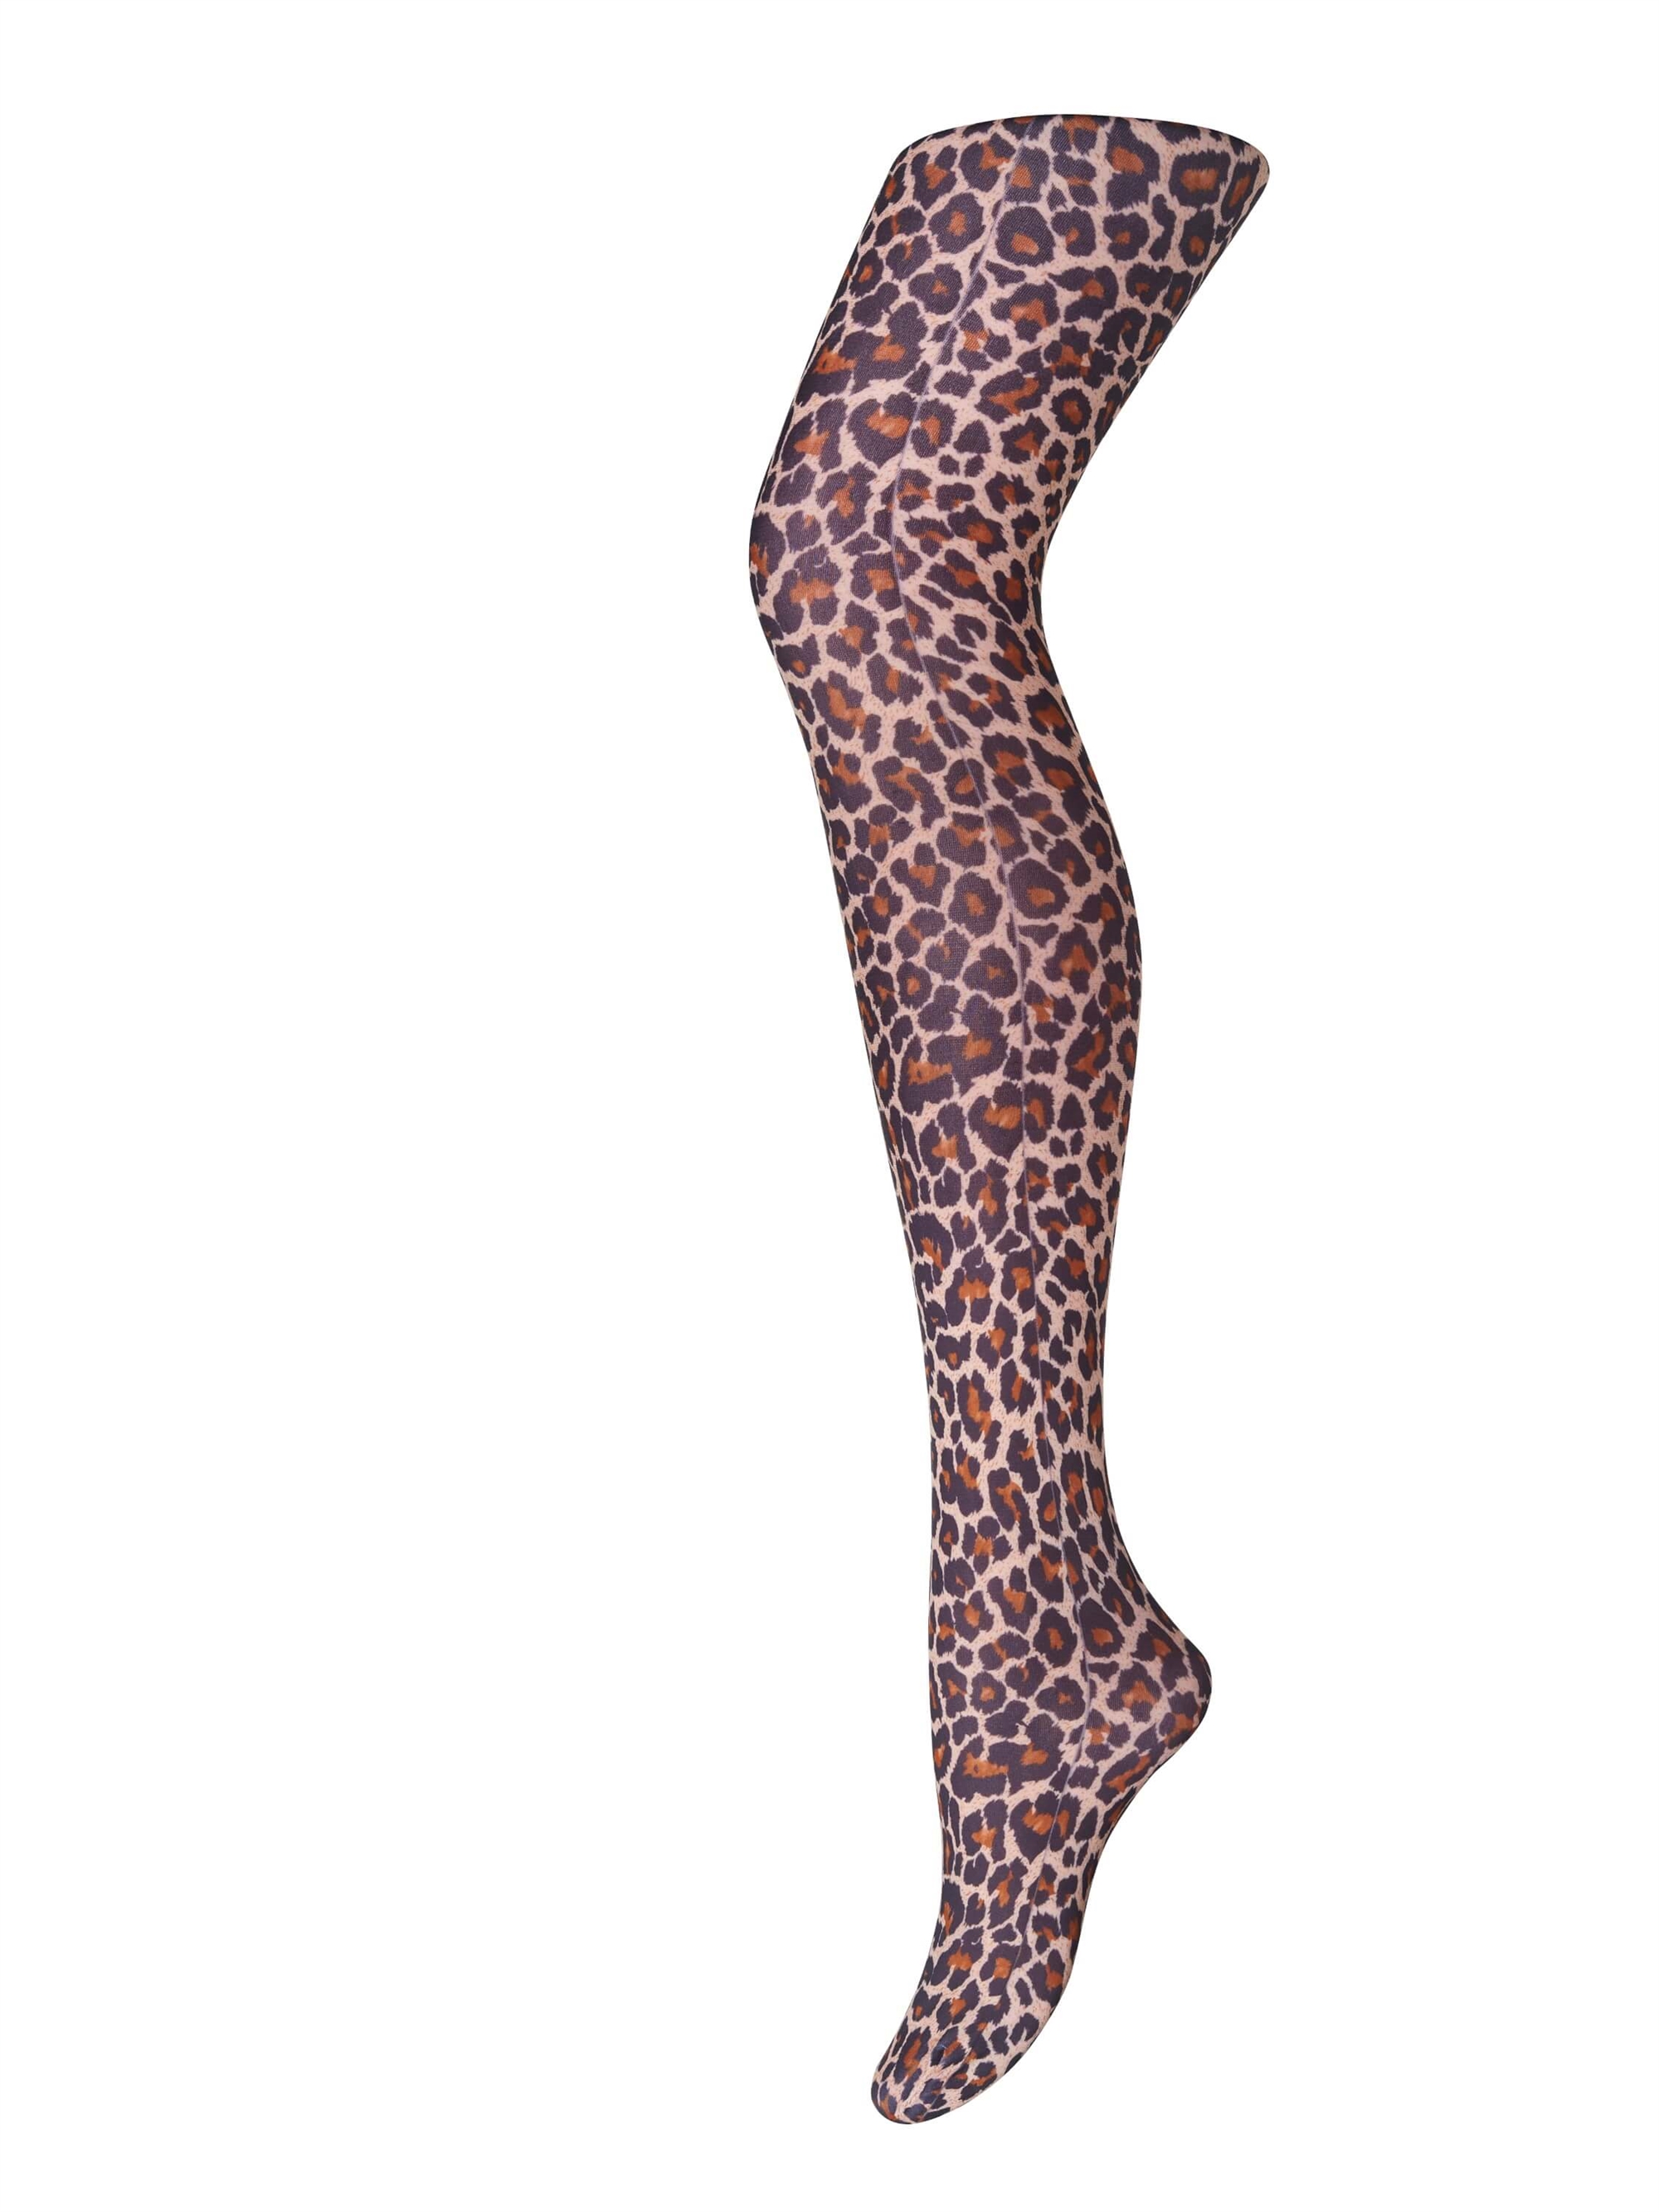 Leopard Print - Sneaky 26,50 EUR Strumpfhose Fox